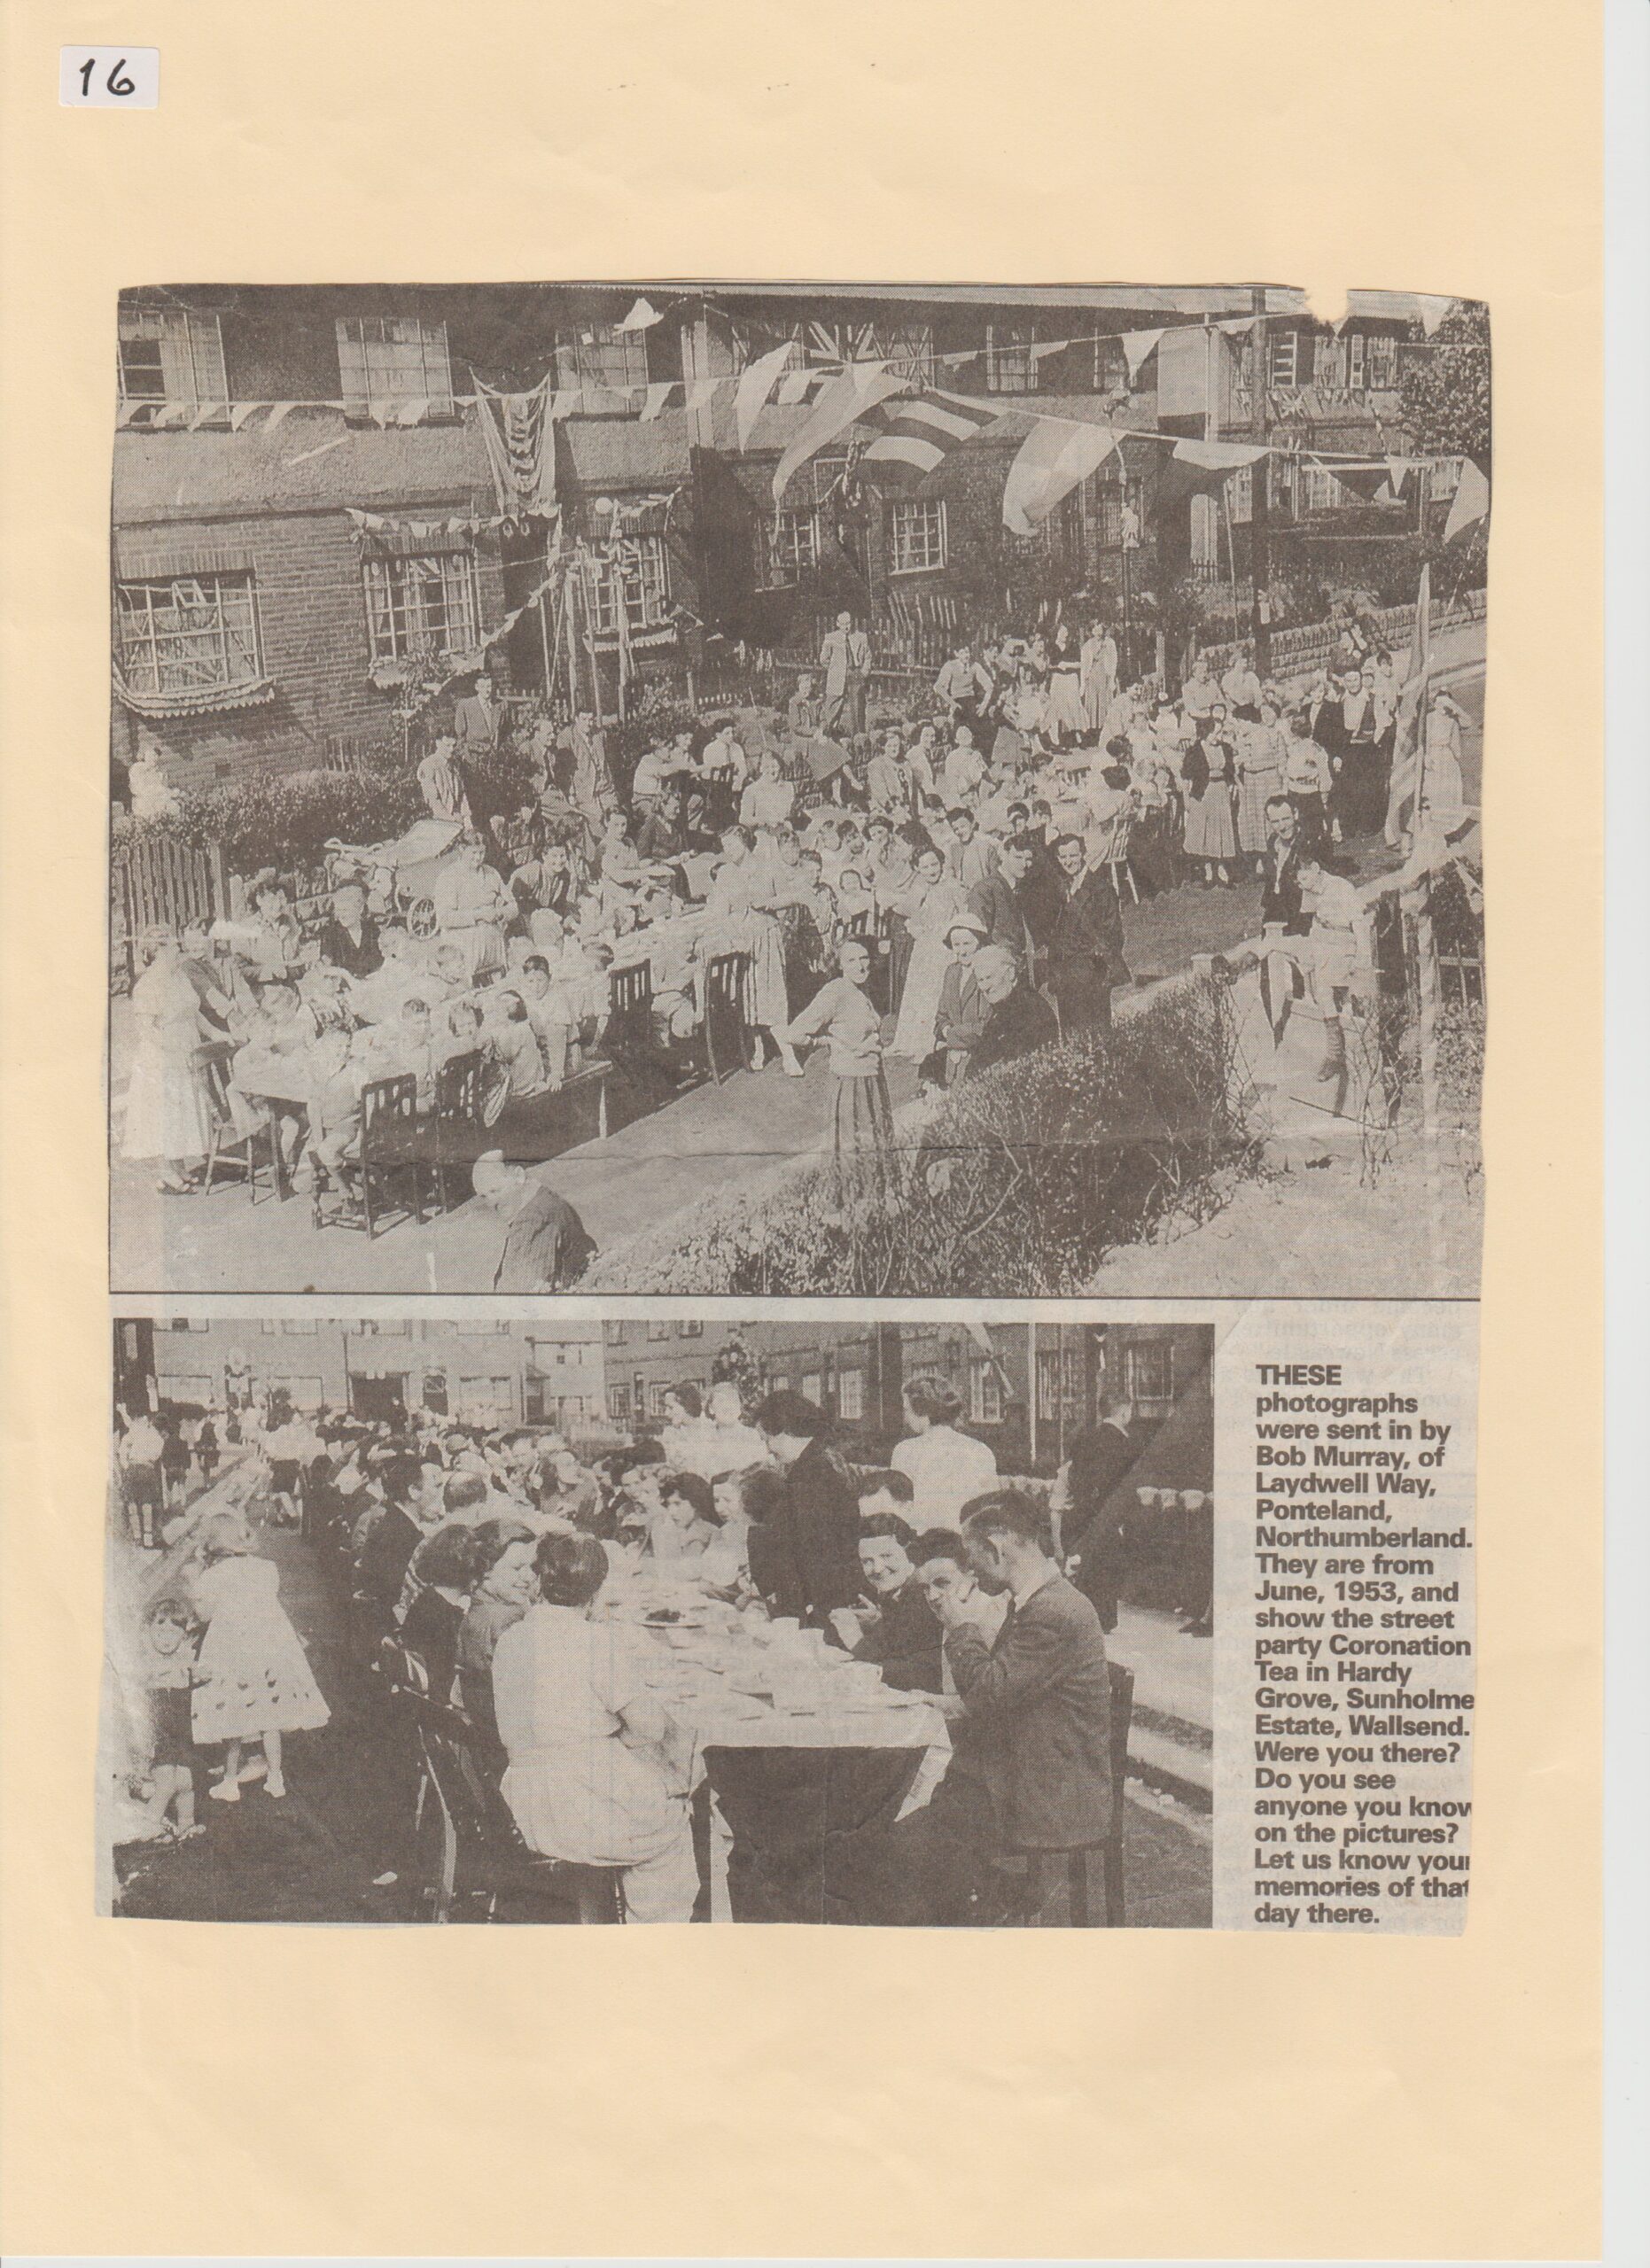 Coronation Tea Party in Hardy Grove June 1953